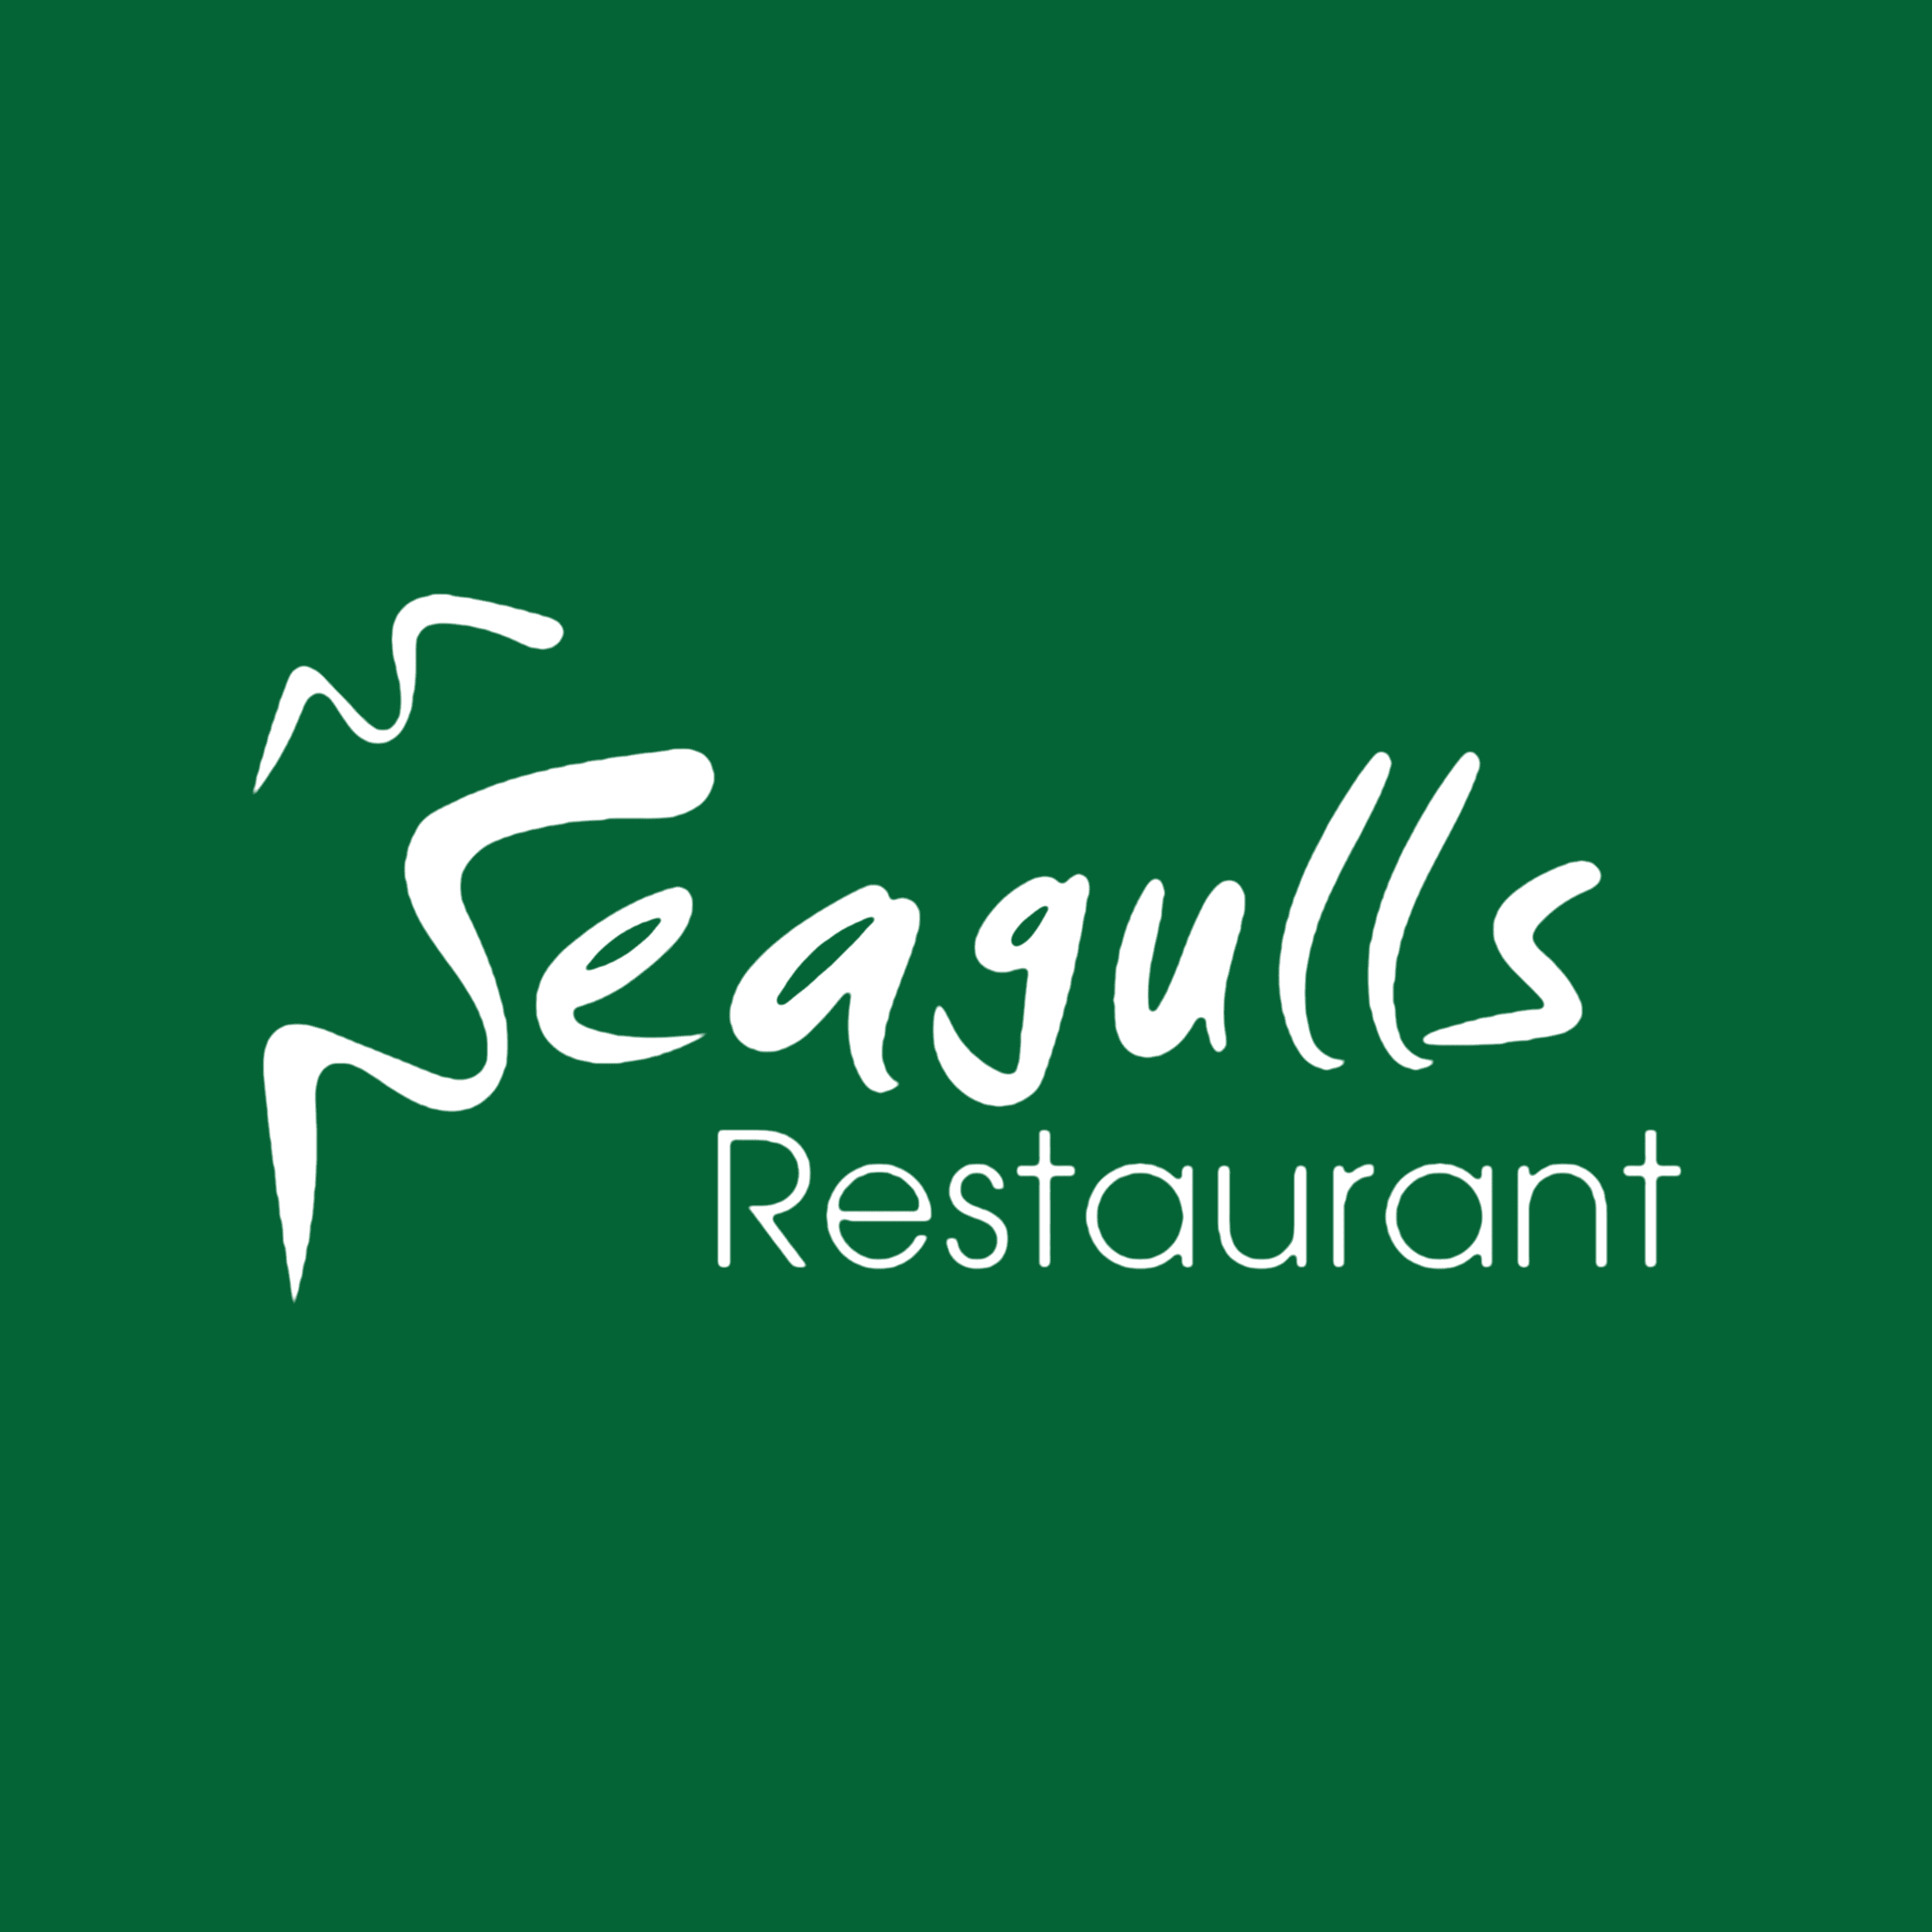 Seagulls Restaurant